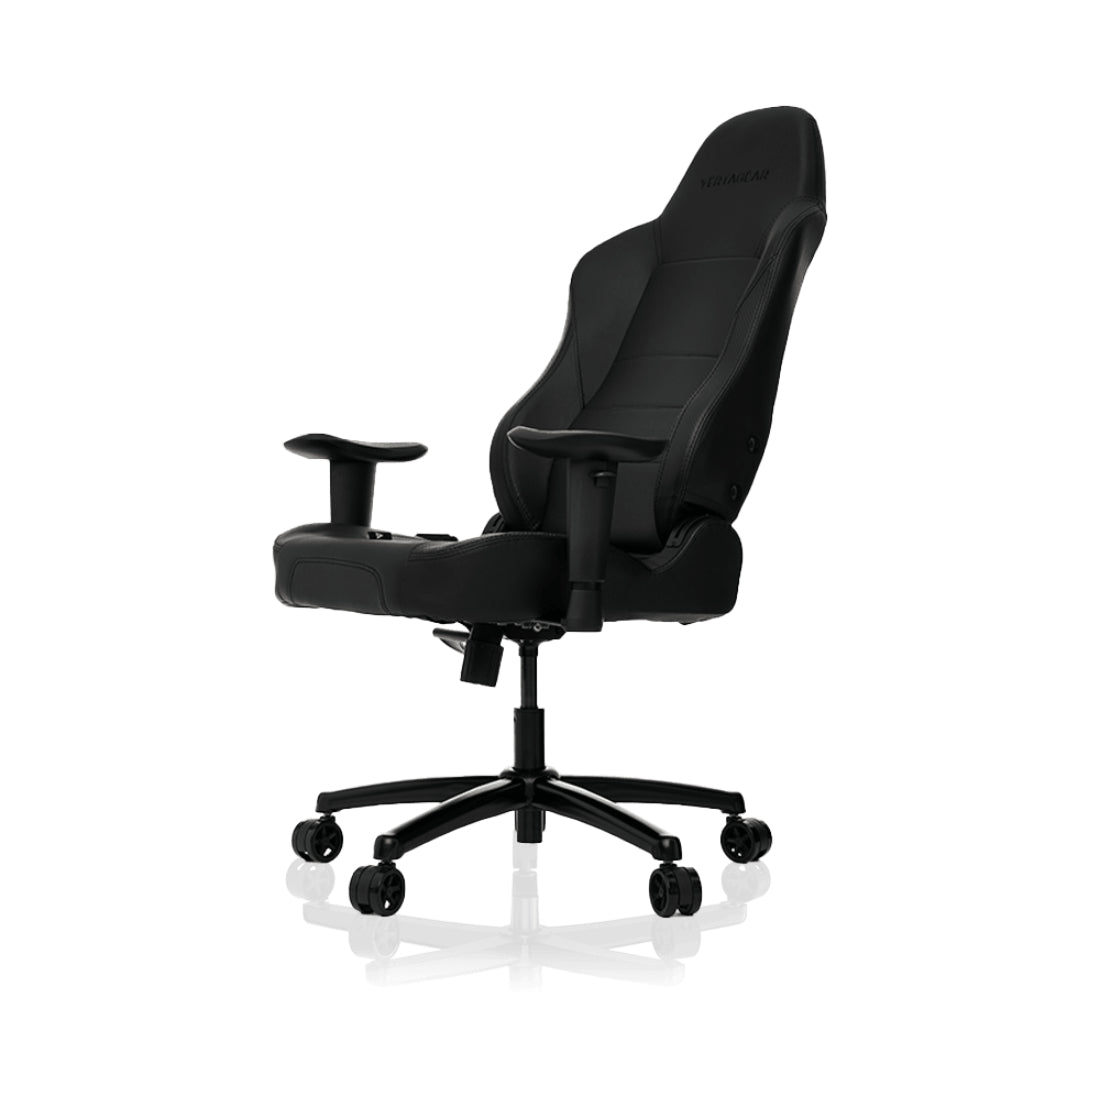 Vertagear PL1000 Gaming Chair - Black/Carbon - كرسي